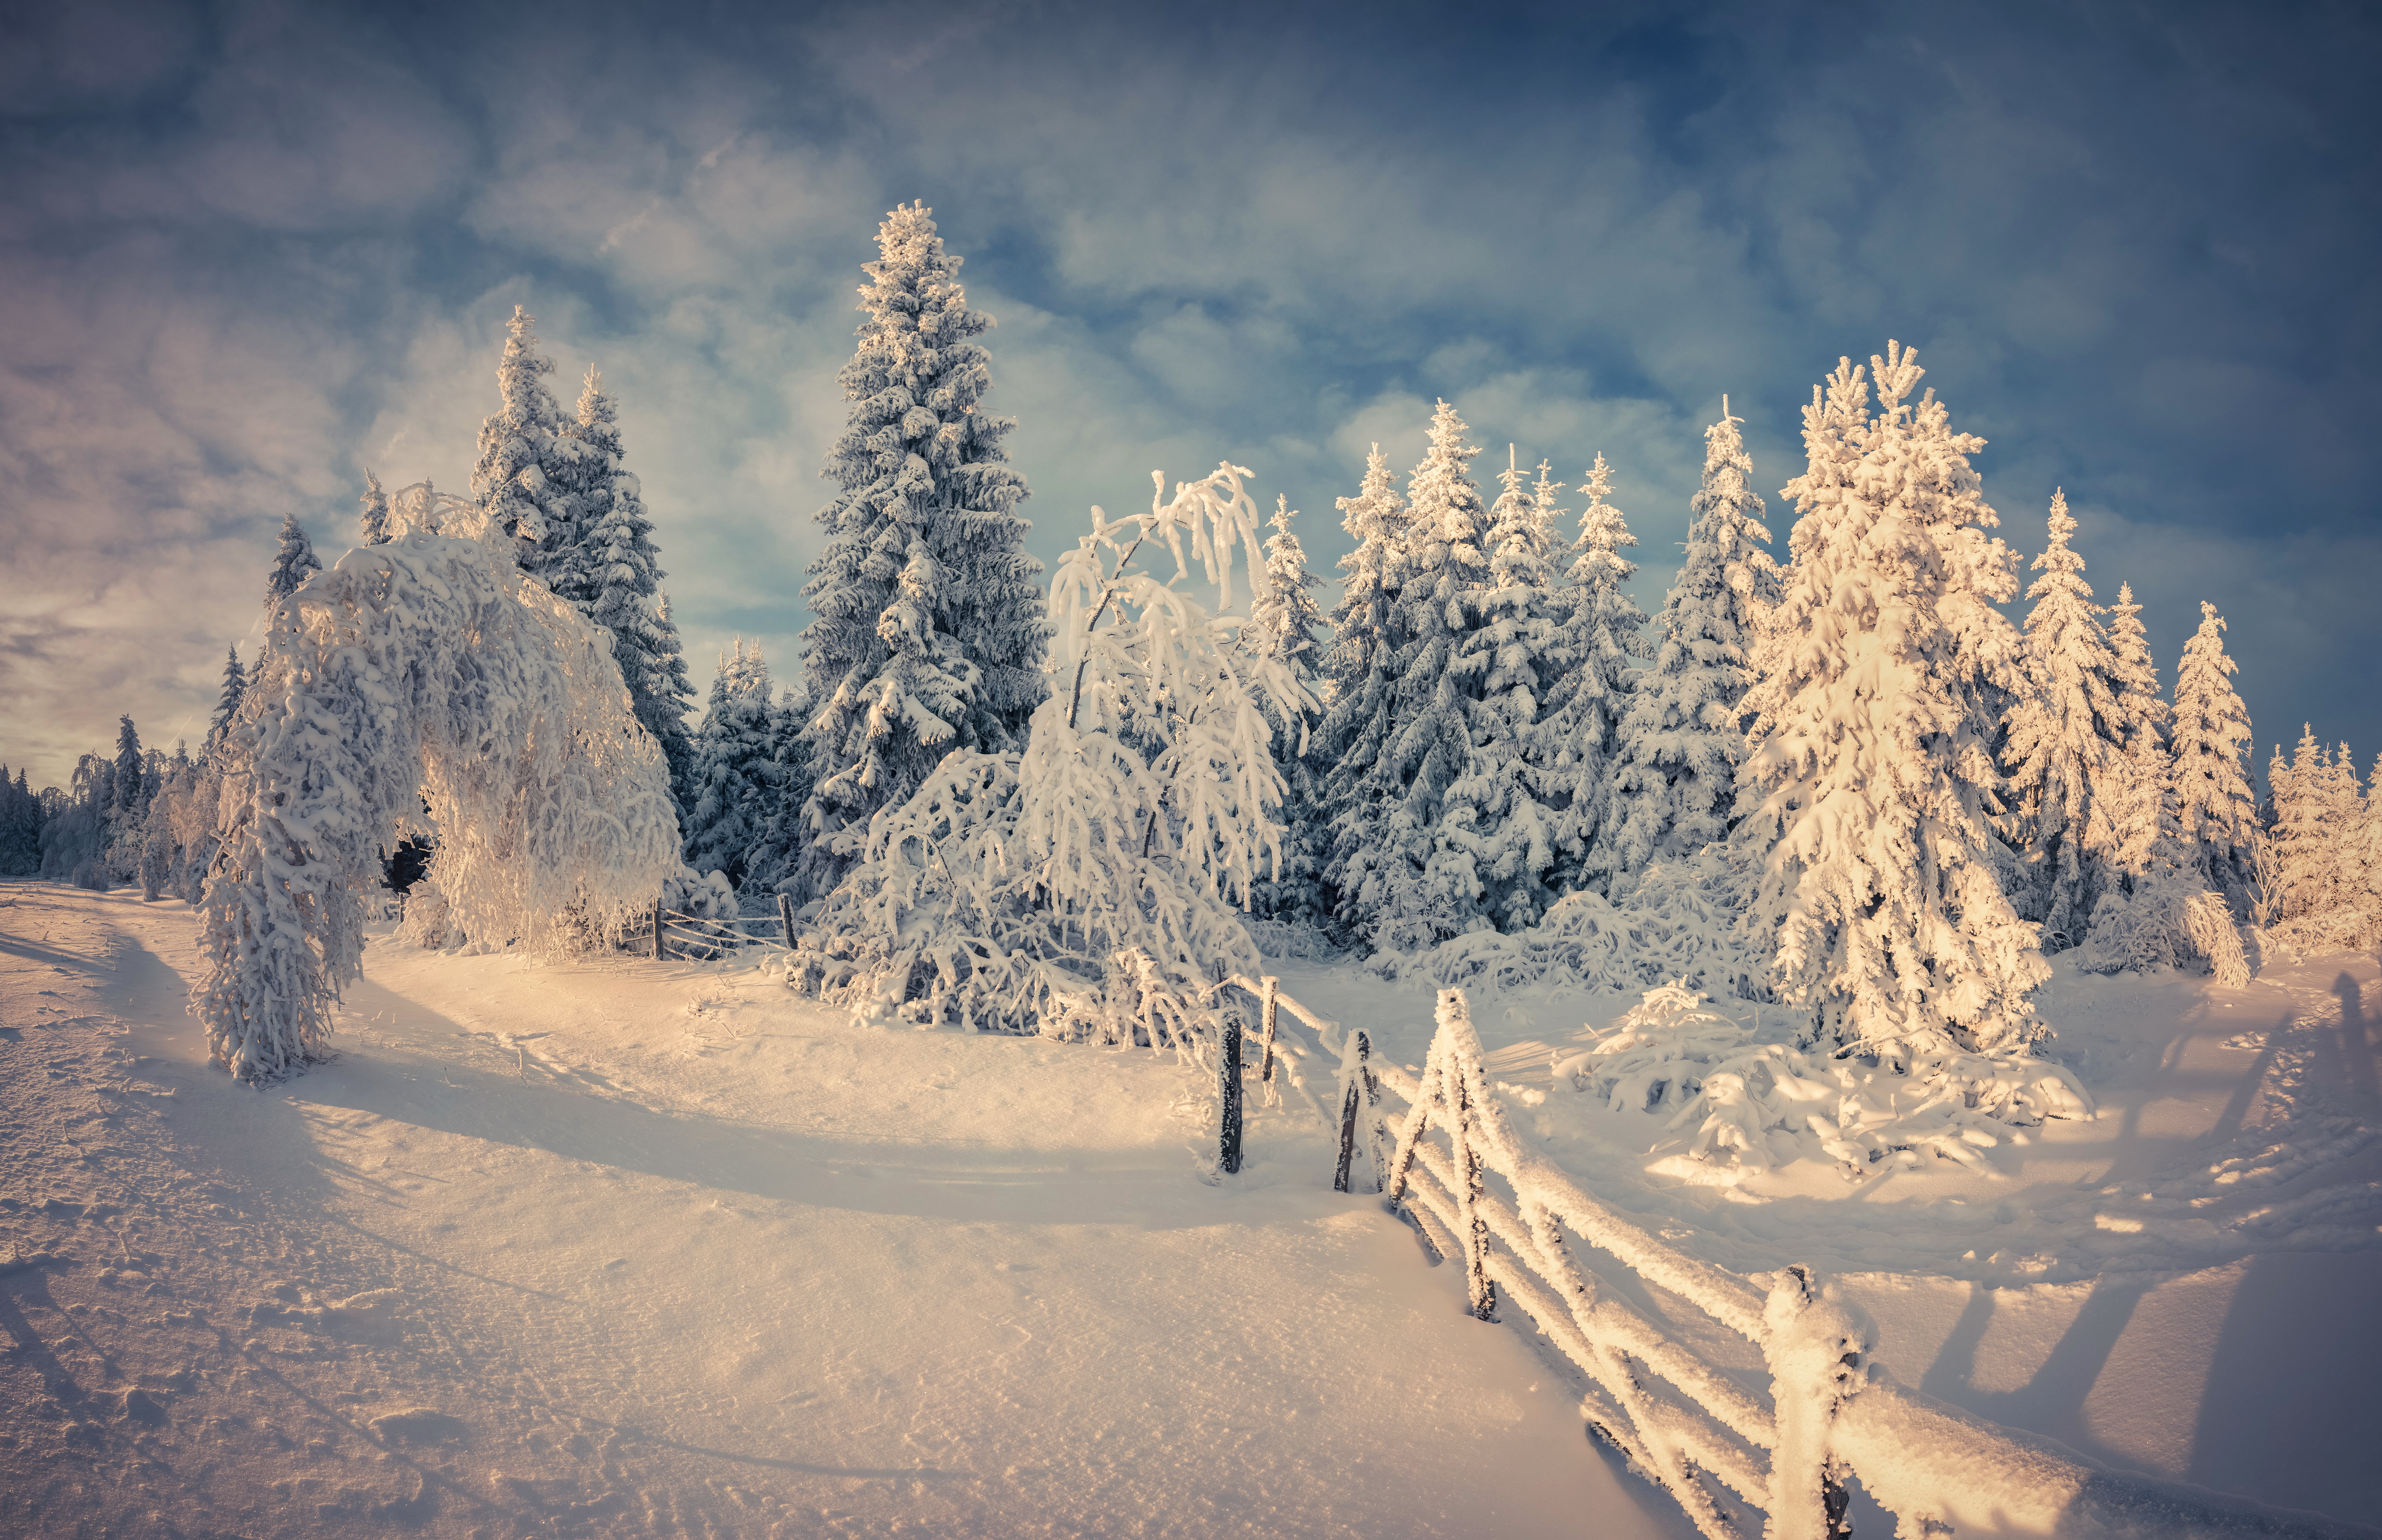 Картинка зимний период. Зима снег. Зимняя природа. Красивая зима. Зима пейзаж.